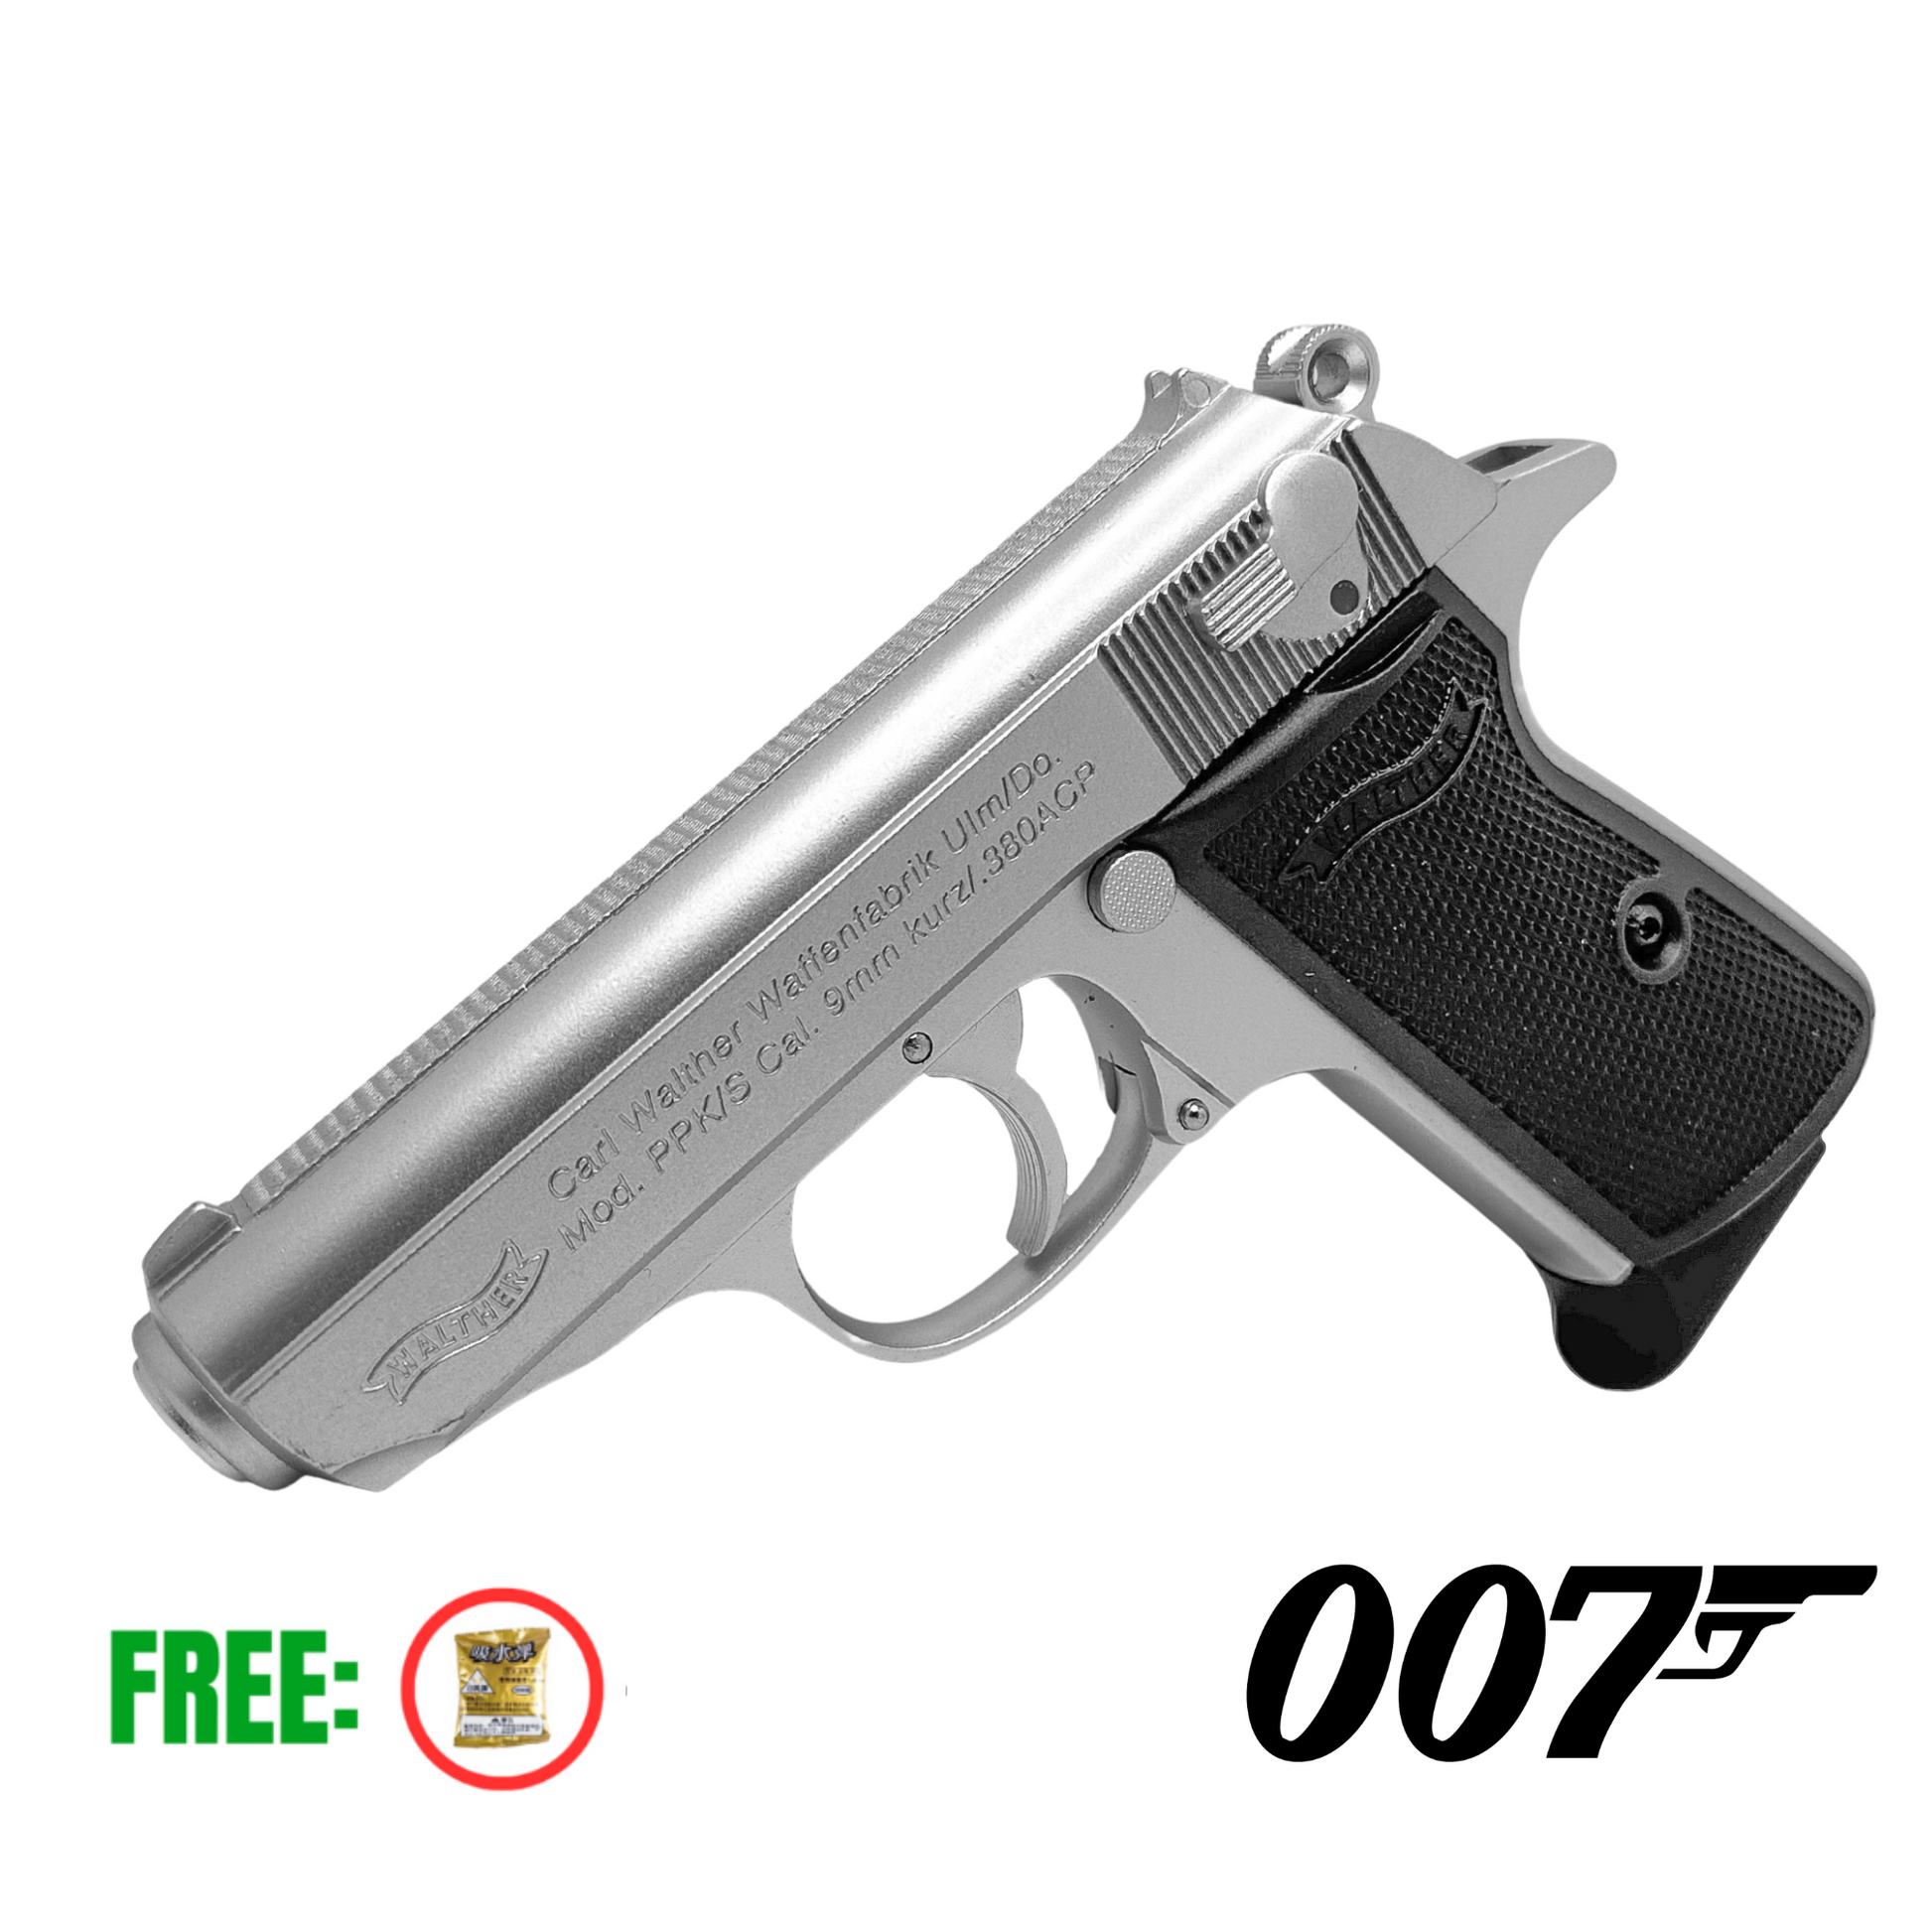 Silver 007 PPK Metal Manual Pistol - Gel Blaster (LIMITED STOCK 